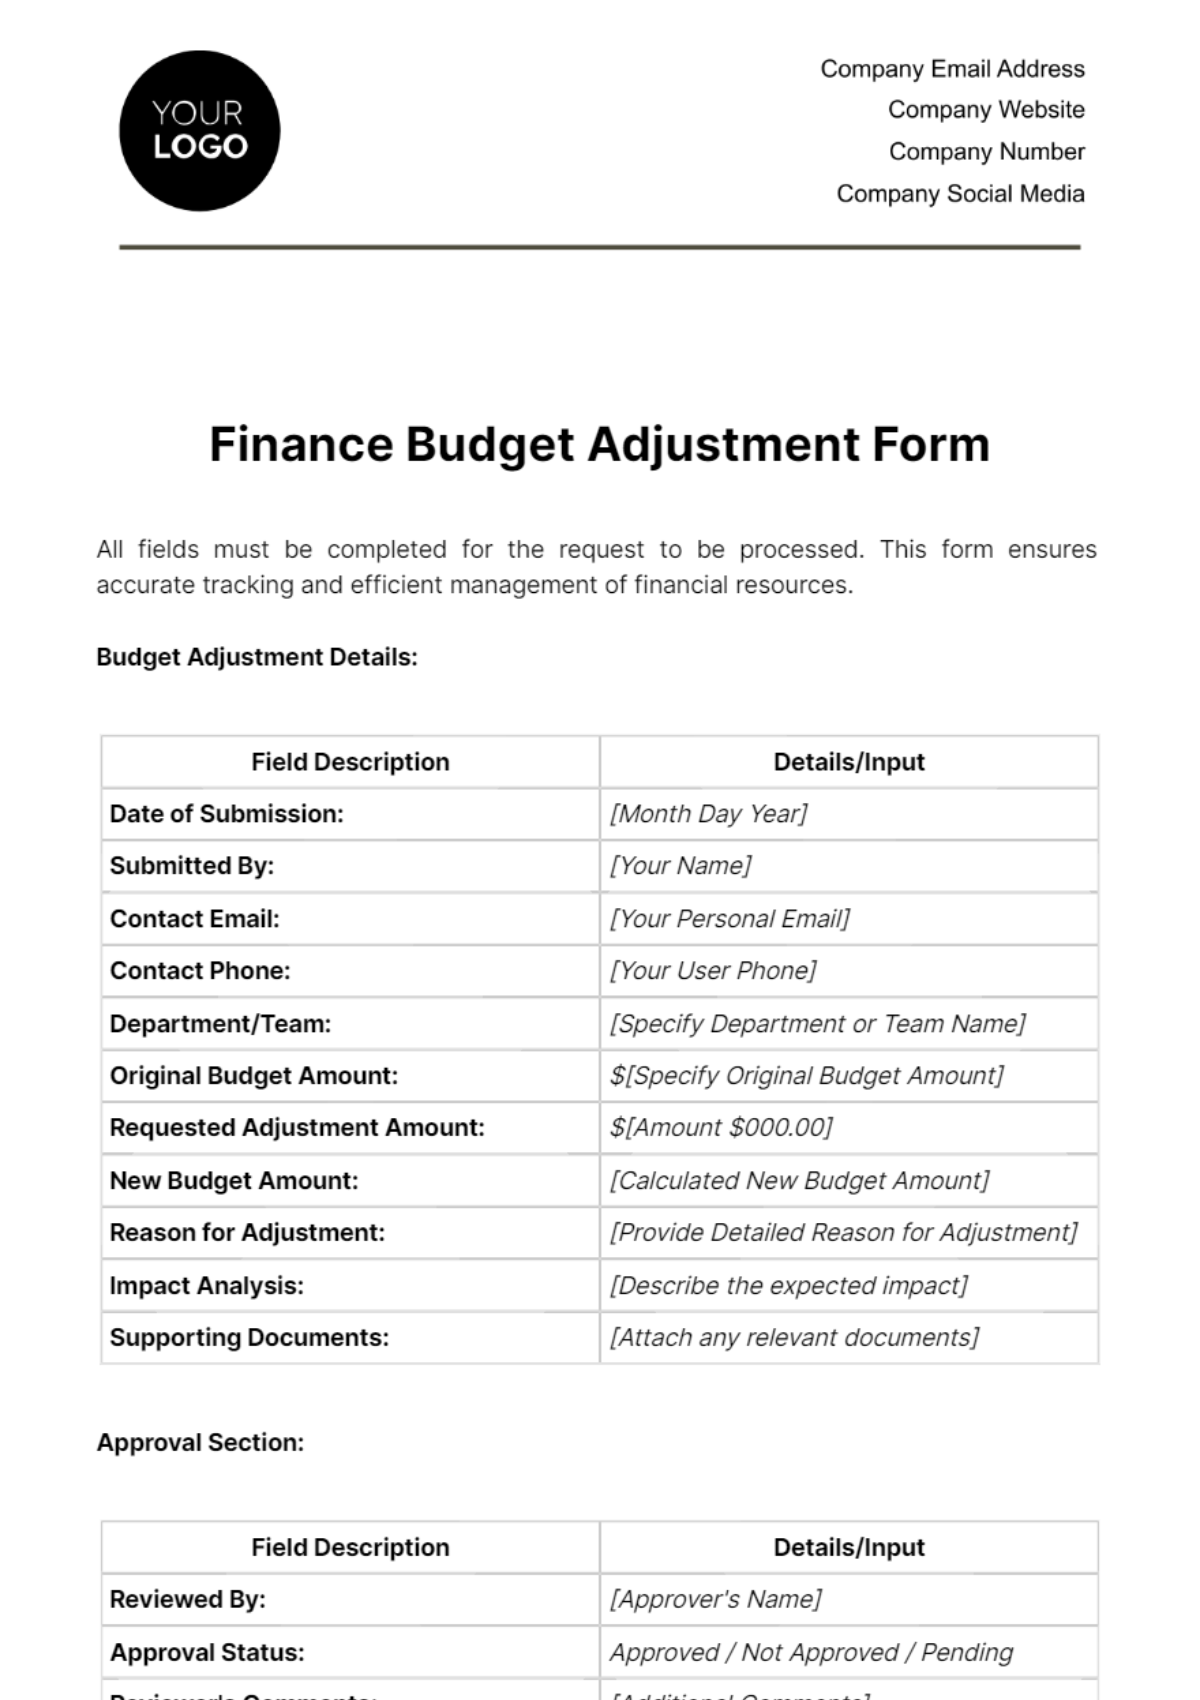 Free Finance Budget Adjustment Form Template